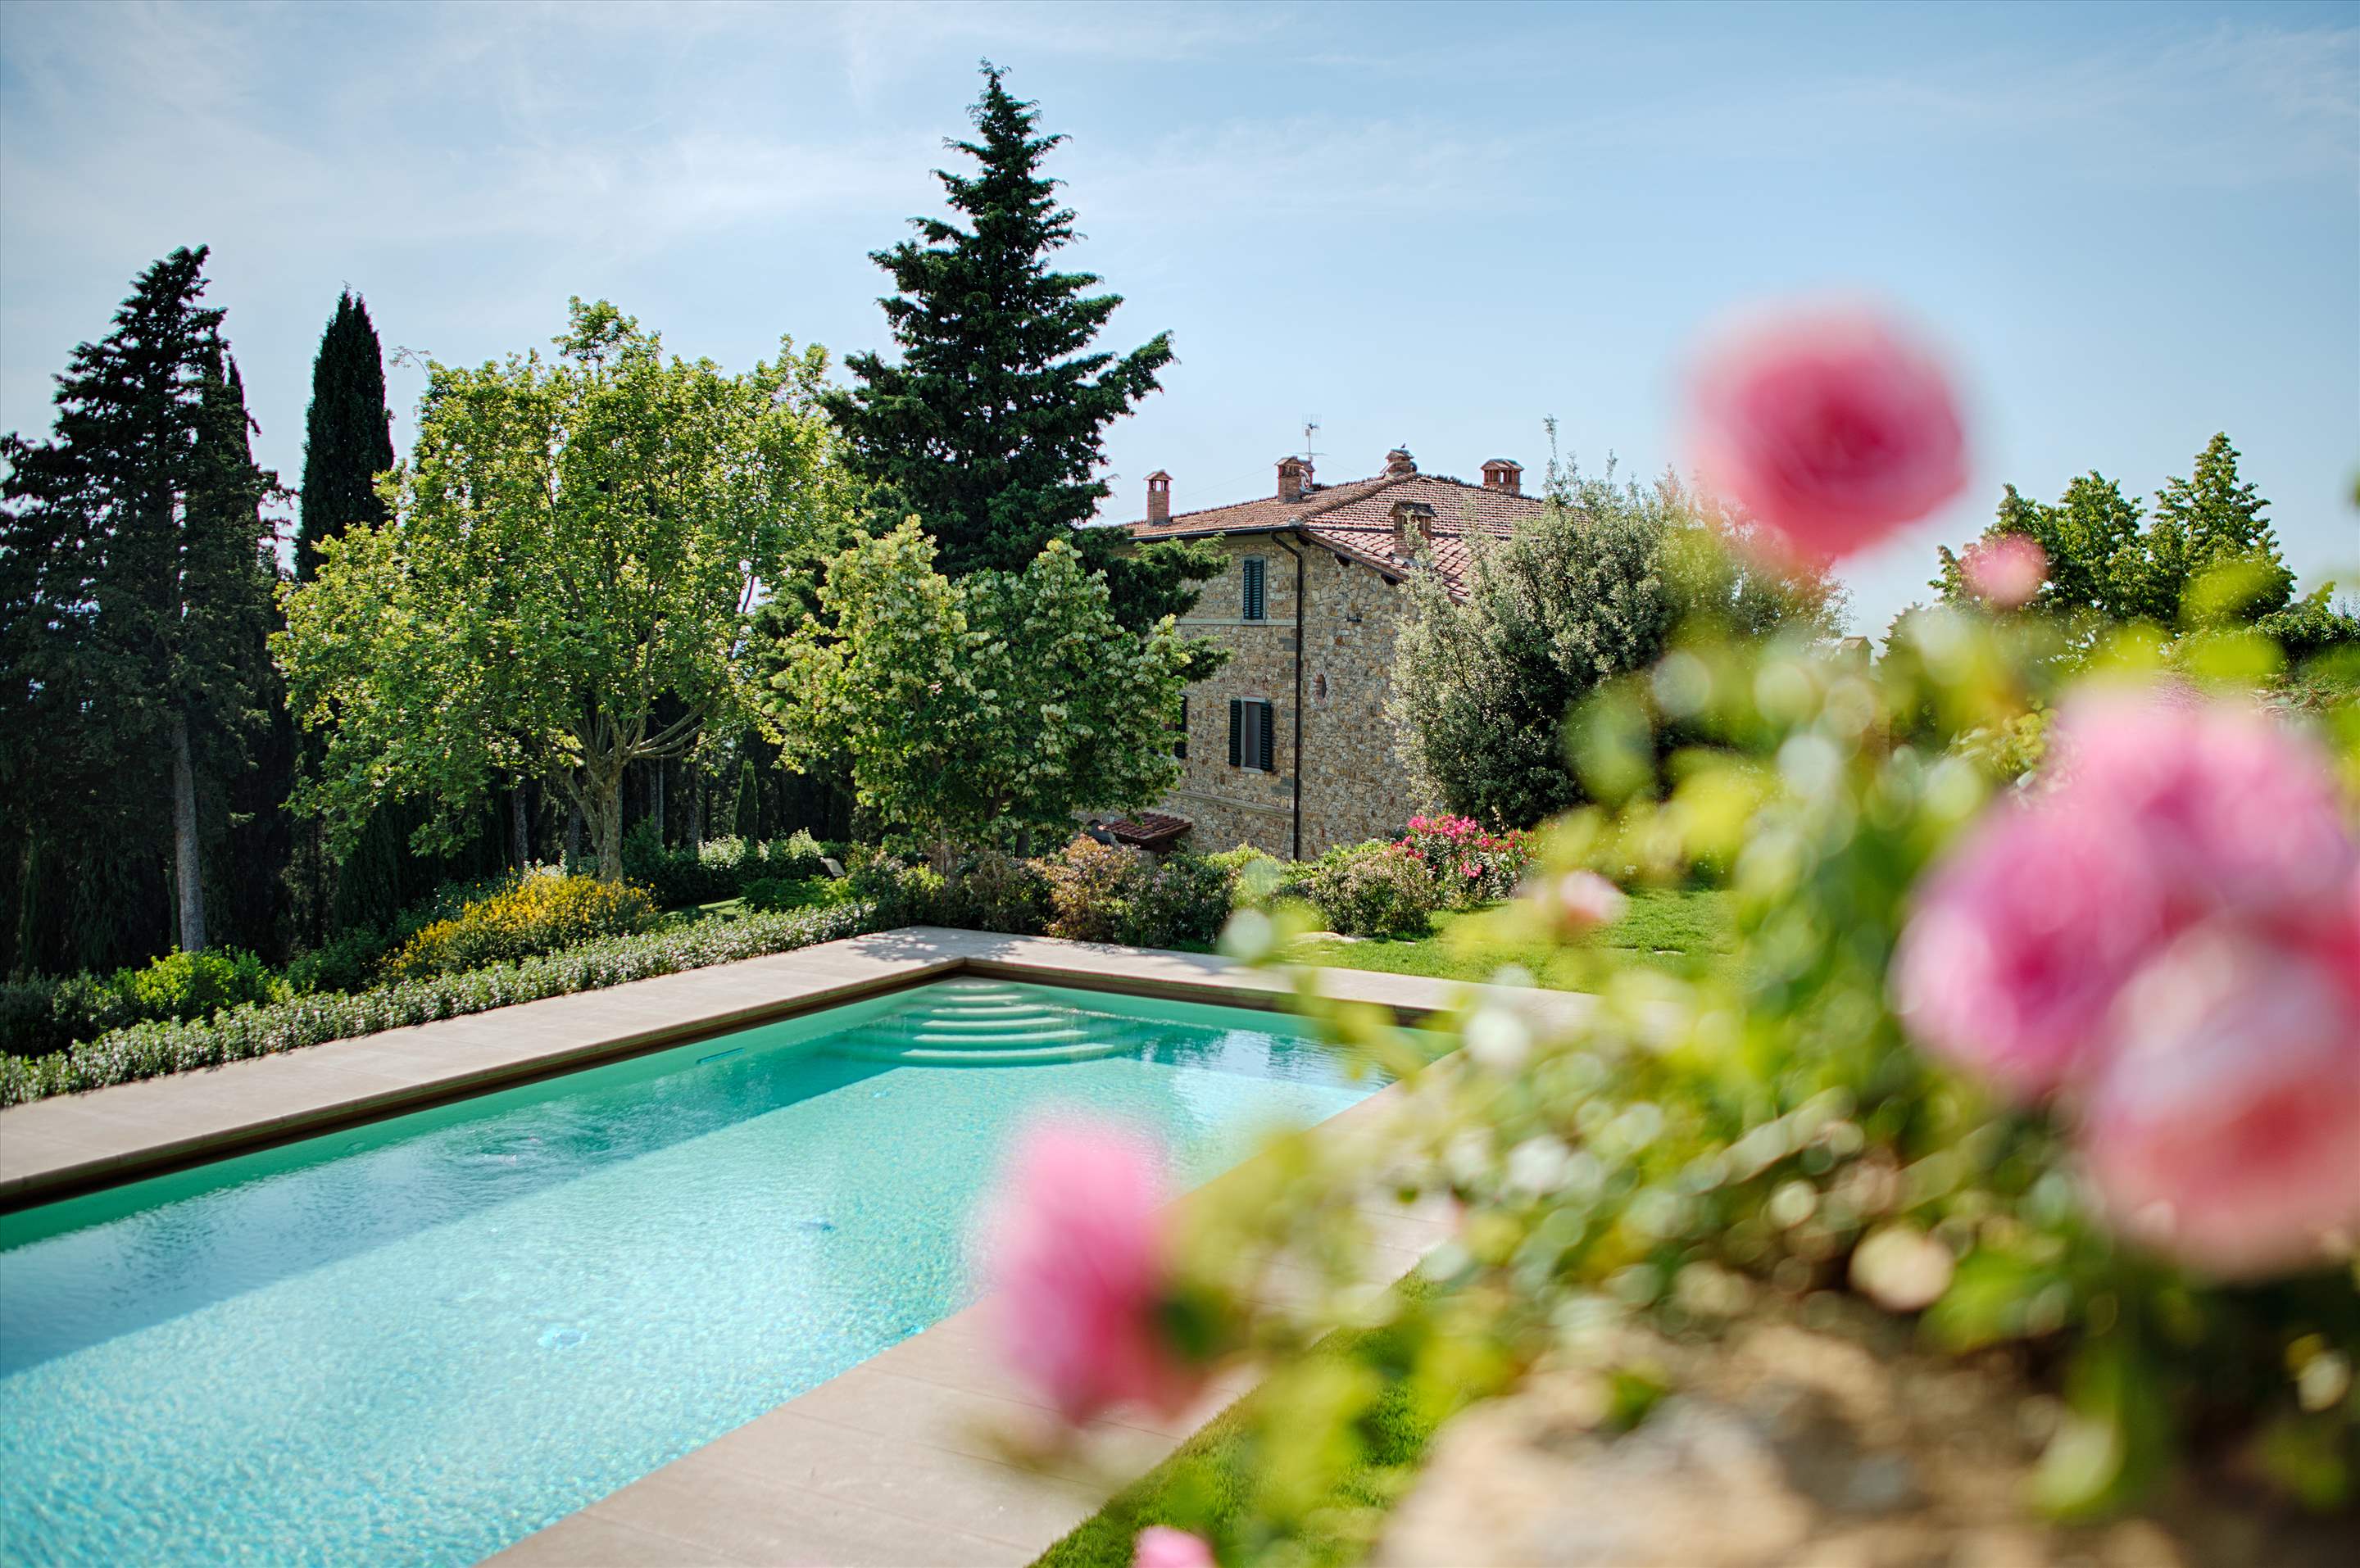 Villa La Valetta, 1 bed Apt Farfalla 2+2, 1 bedroom villa in Chianti & Countryside, Tuscany Photo #6